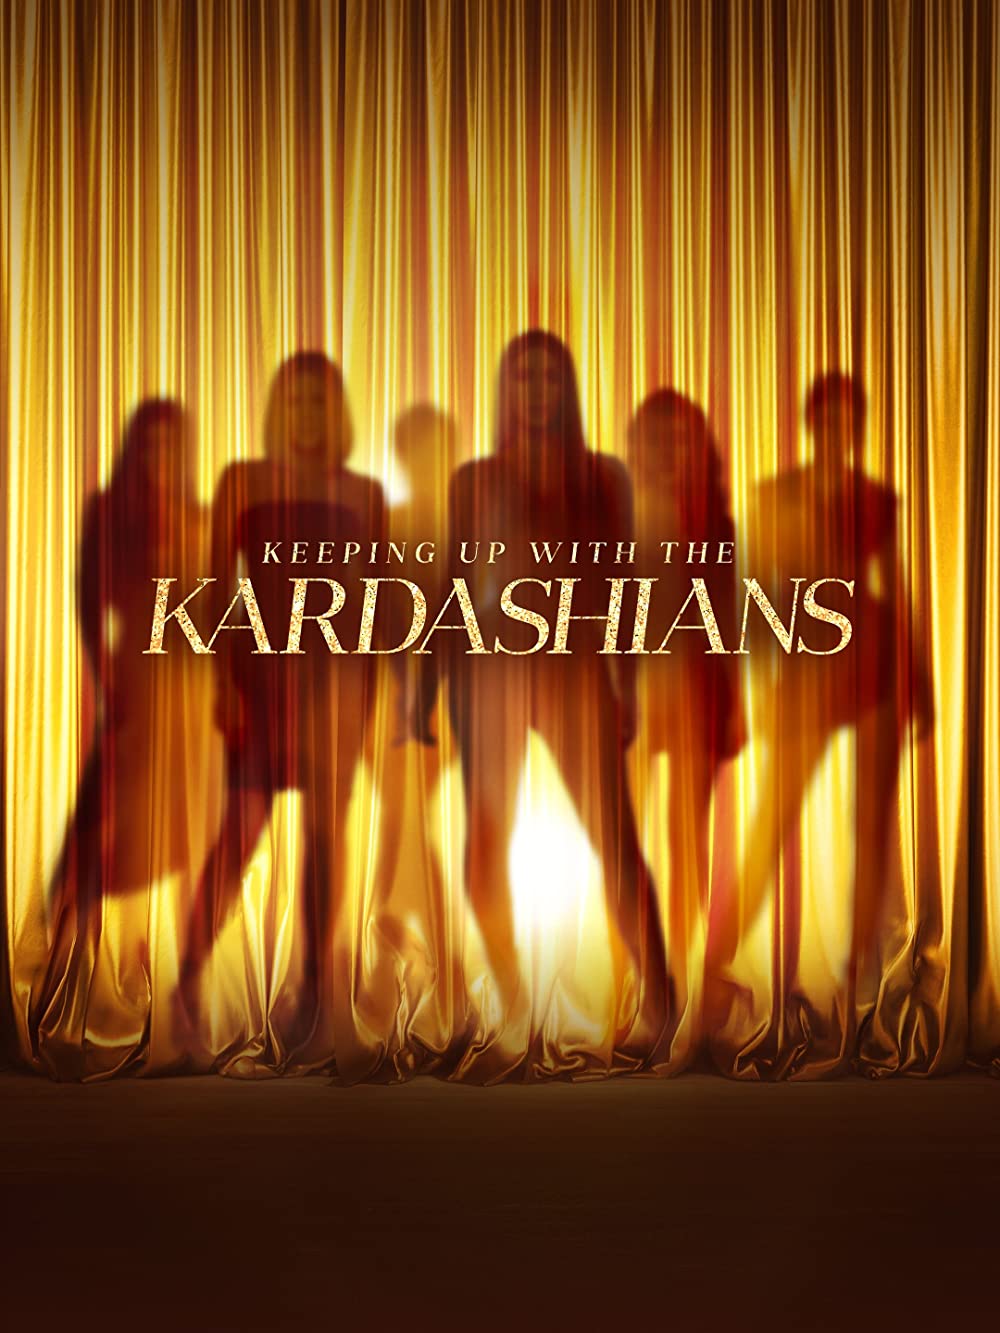 Filmbeschreibung zu Keeping up with the Kardashians - Staffel 18